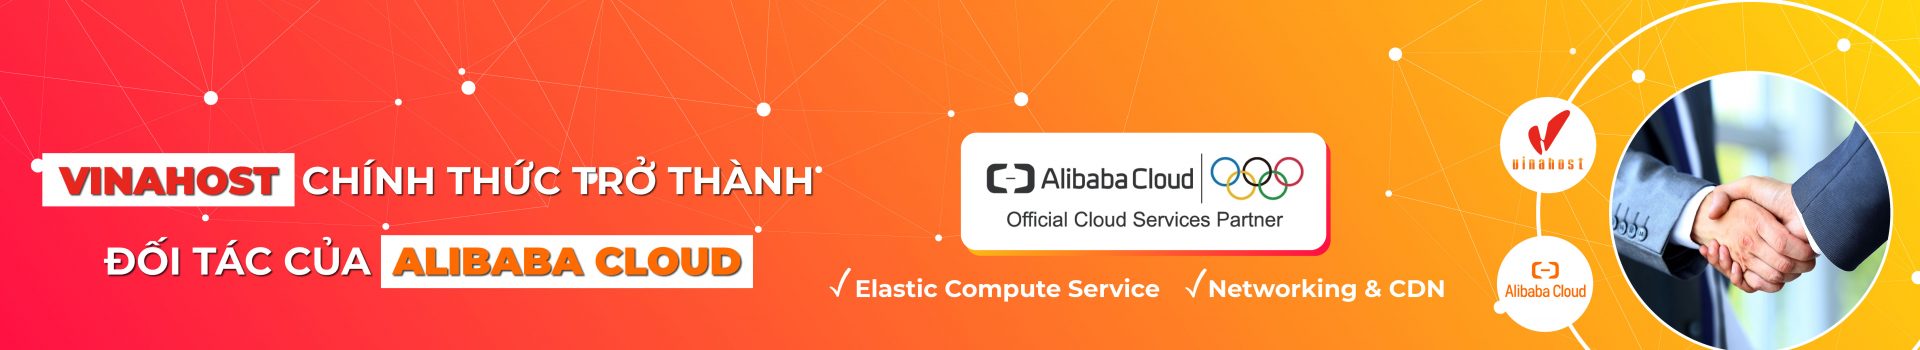 Alibaba Cloud Elaticsearch